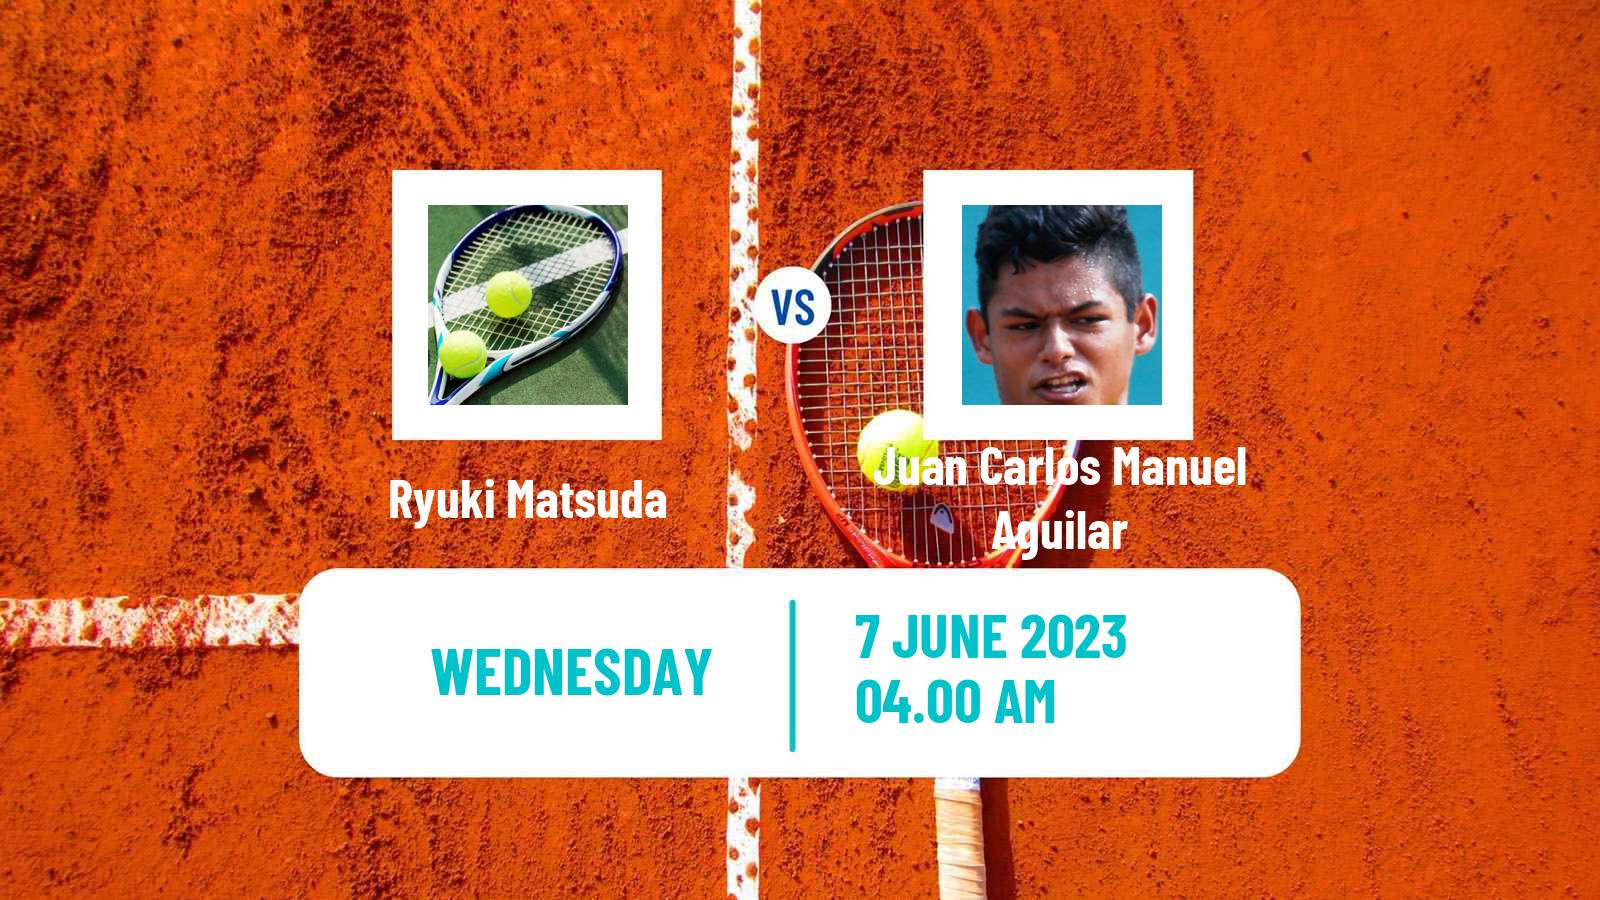 Tennis ITF M15 Monastir 23 Men Ryuki Matsuda - Juan Carlos Manuel Aguilar